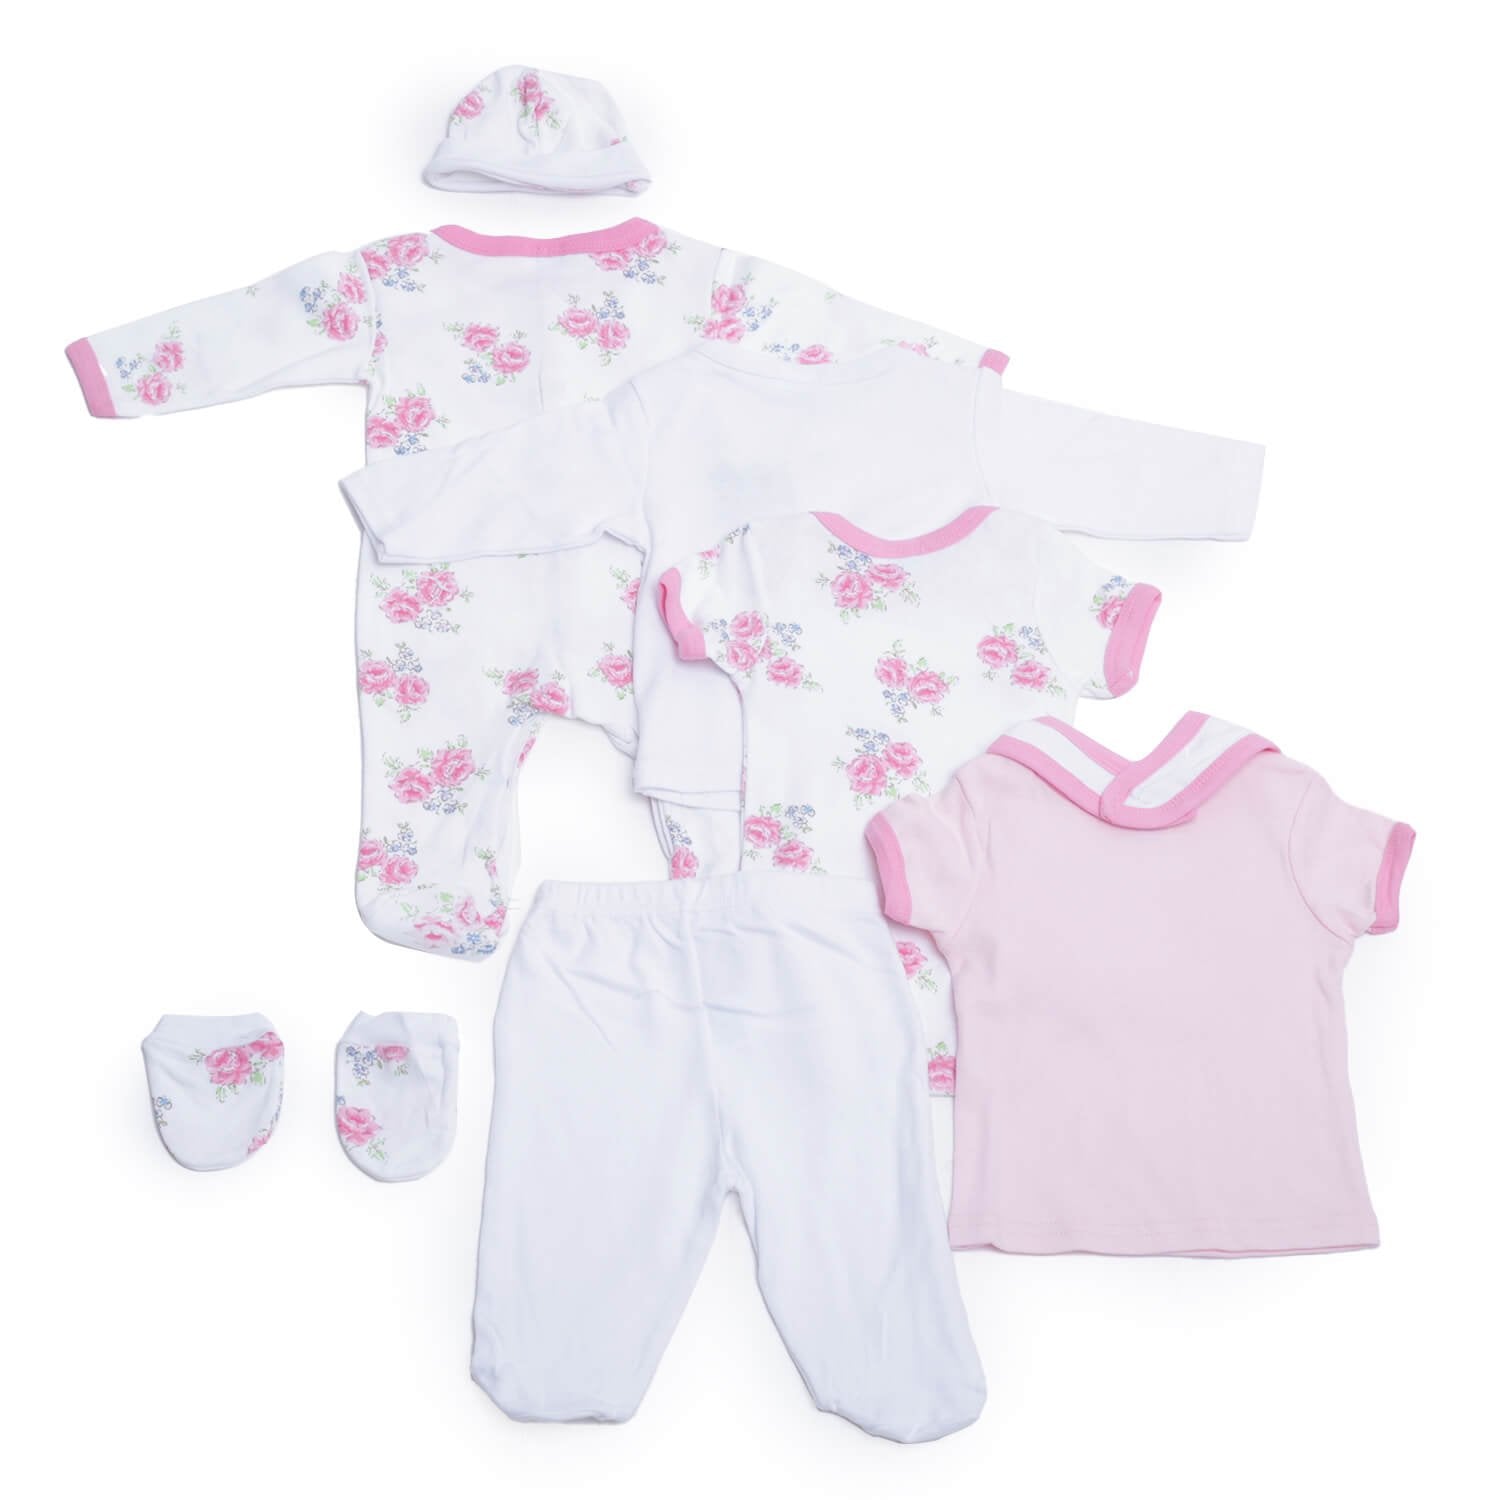 8 pcs Pink Floral Baby Girl/Boy Clothes Set - Little Surprise Box8 pcs Pink Floral Baby Girl/Boy Clothes Set